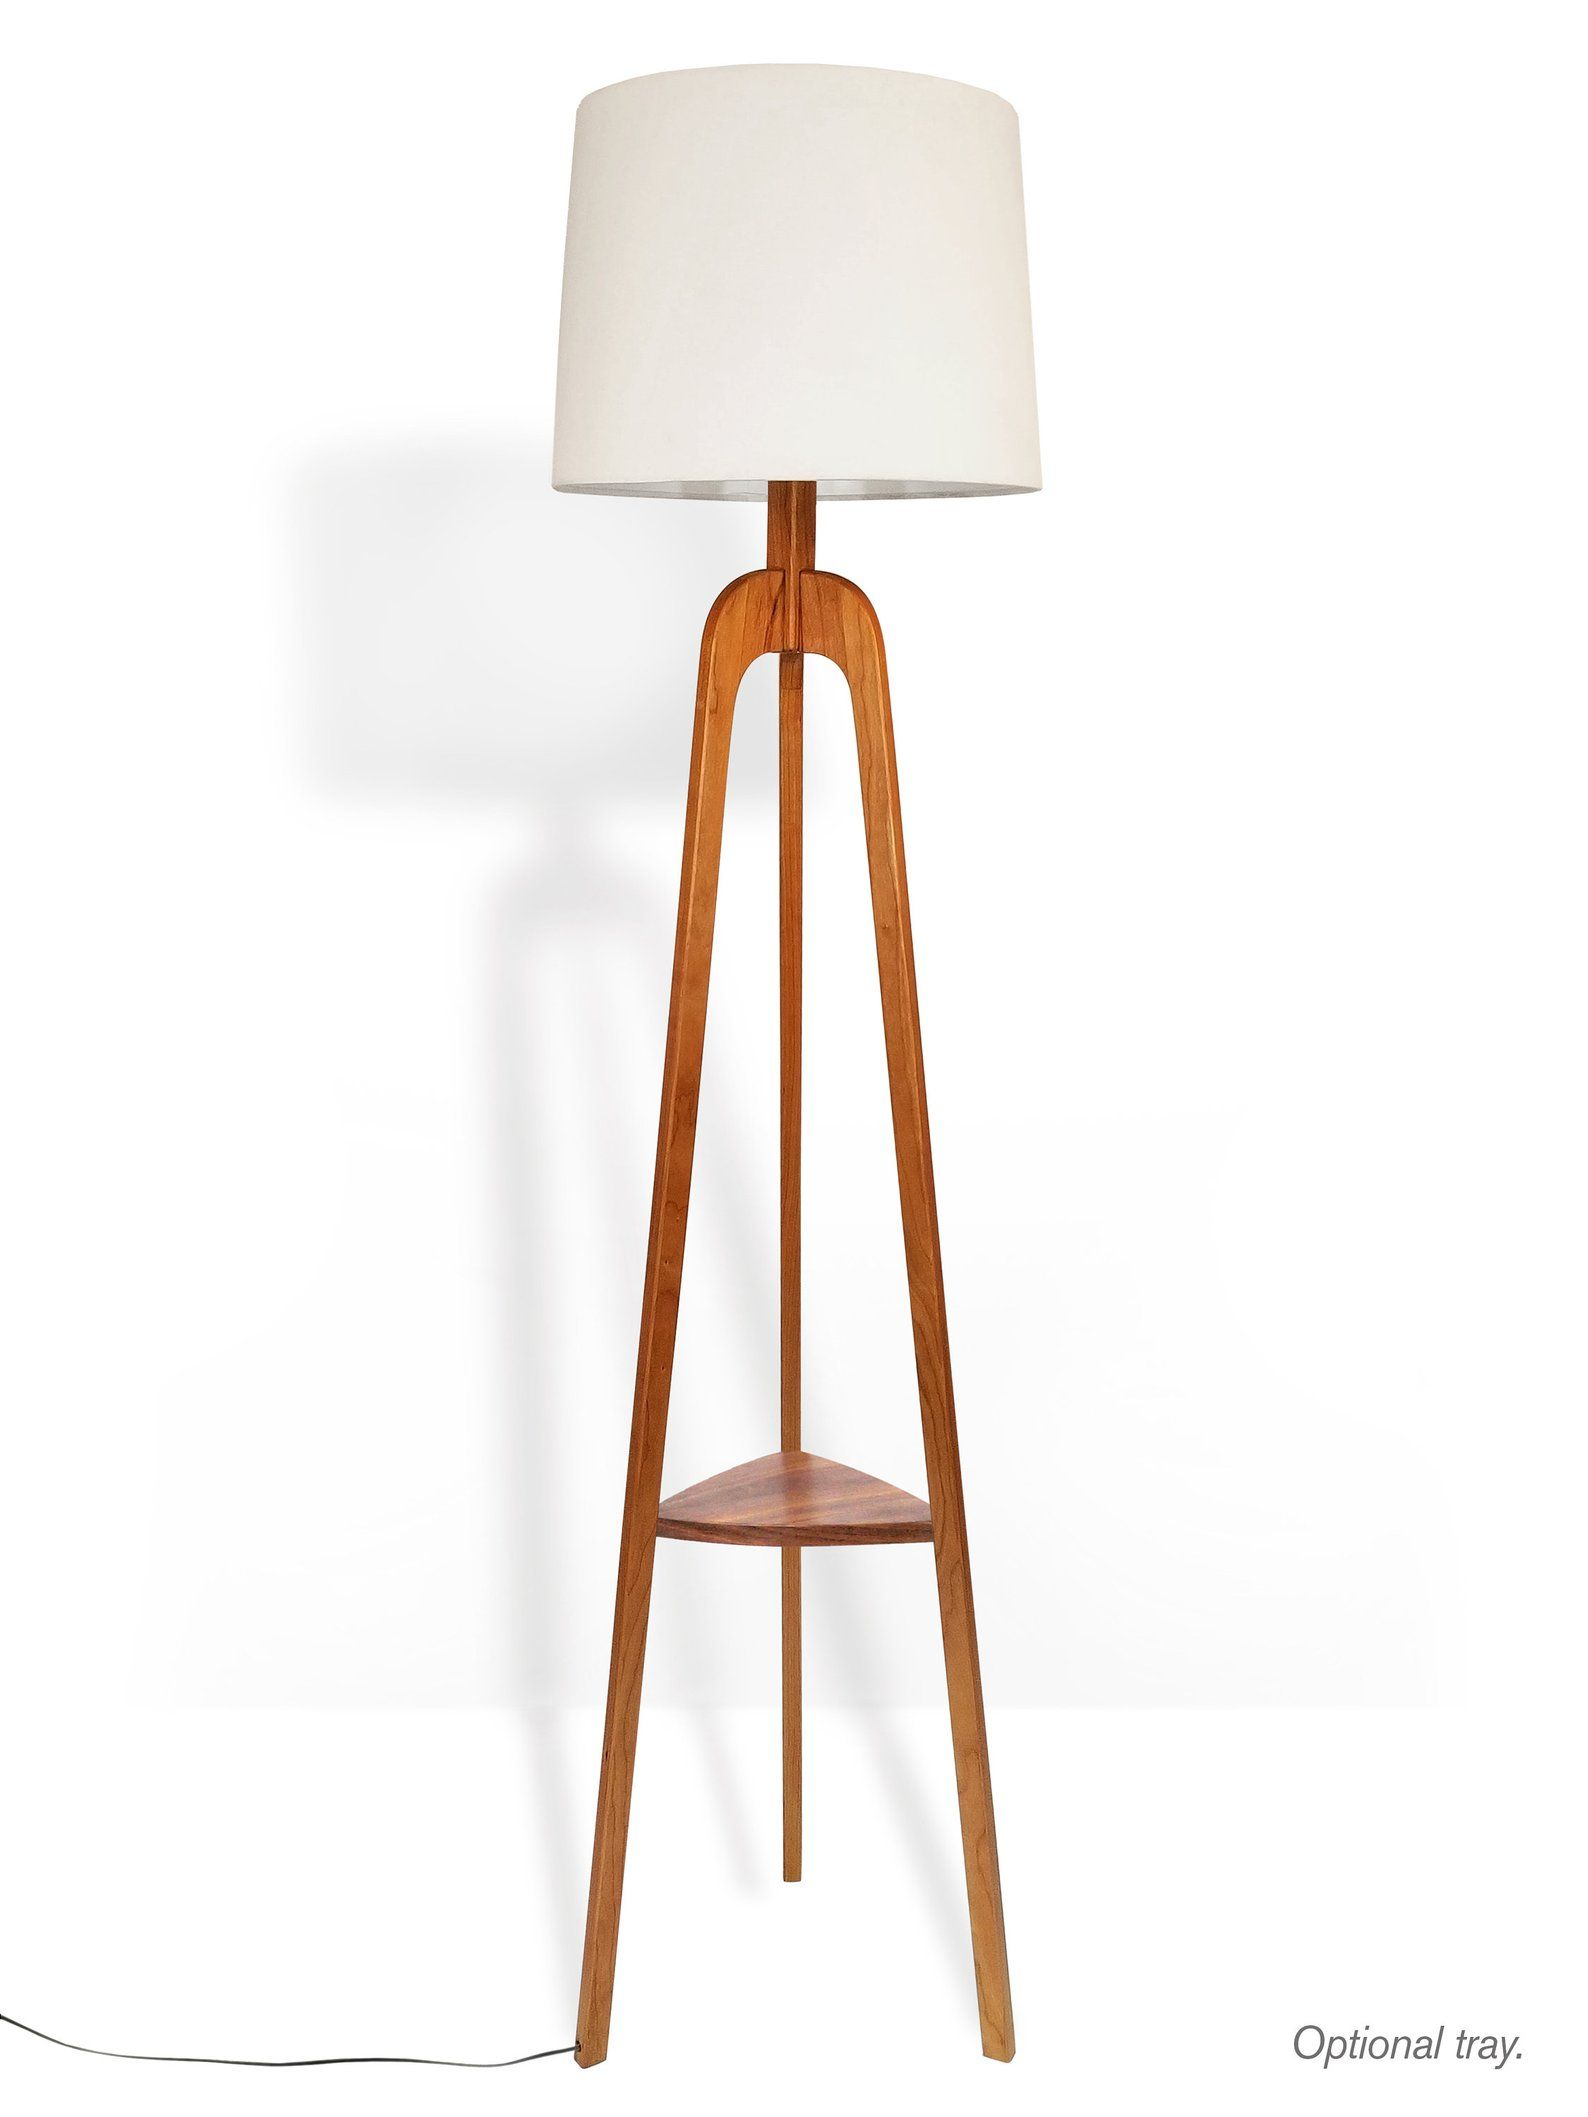 Floor Lamp Danish Modern Tripod Lamp Cherry Etsy In 2019 regarding size 1588 X 2117